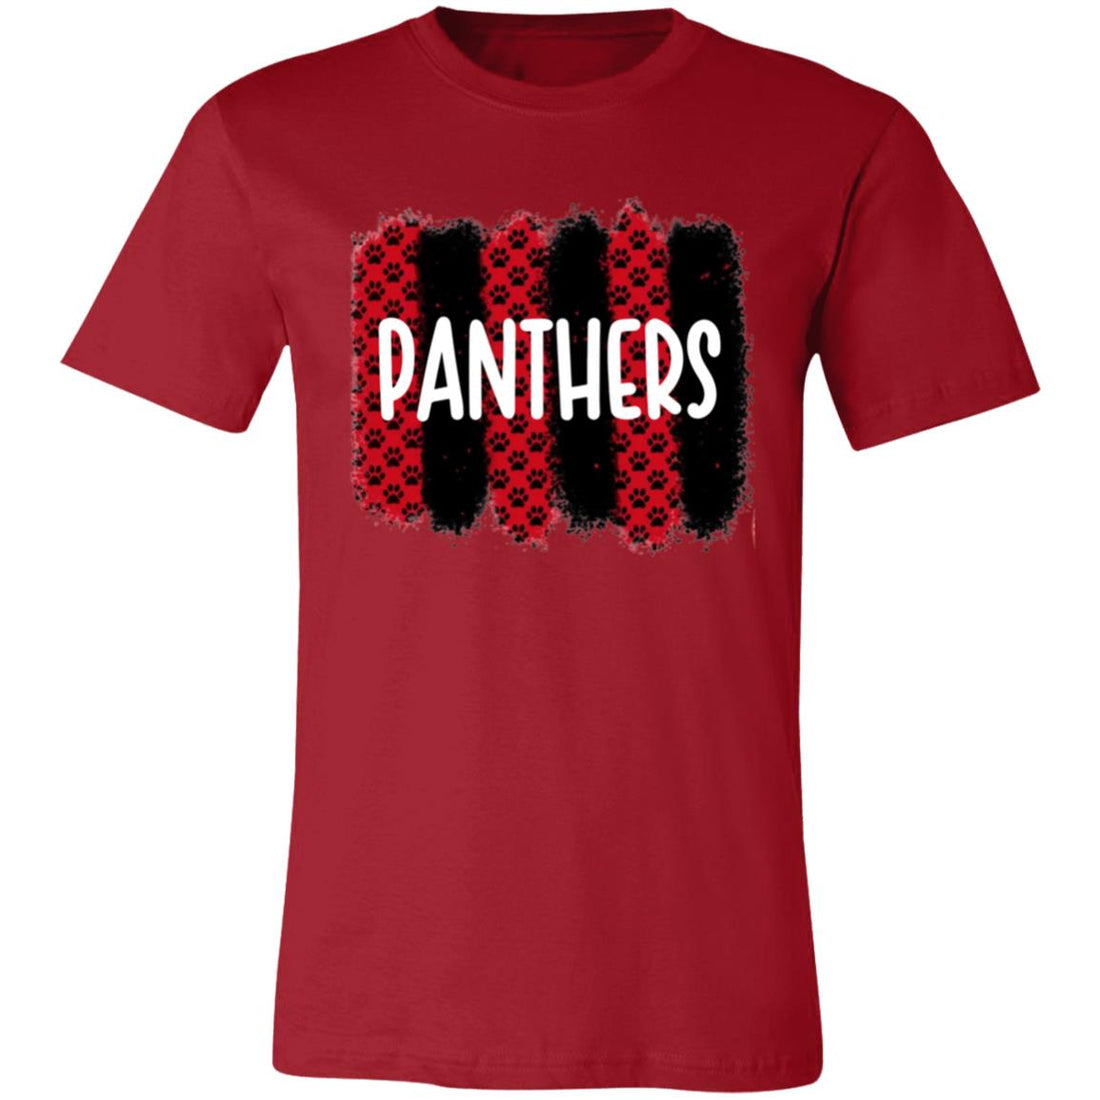 Panthers Paw Tracks Short-Sleeve T-Shirt - T-Shirts - Positively Sassy - Panthers Paw Tracks Short-Sleeve T-Shirt